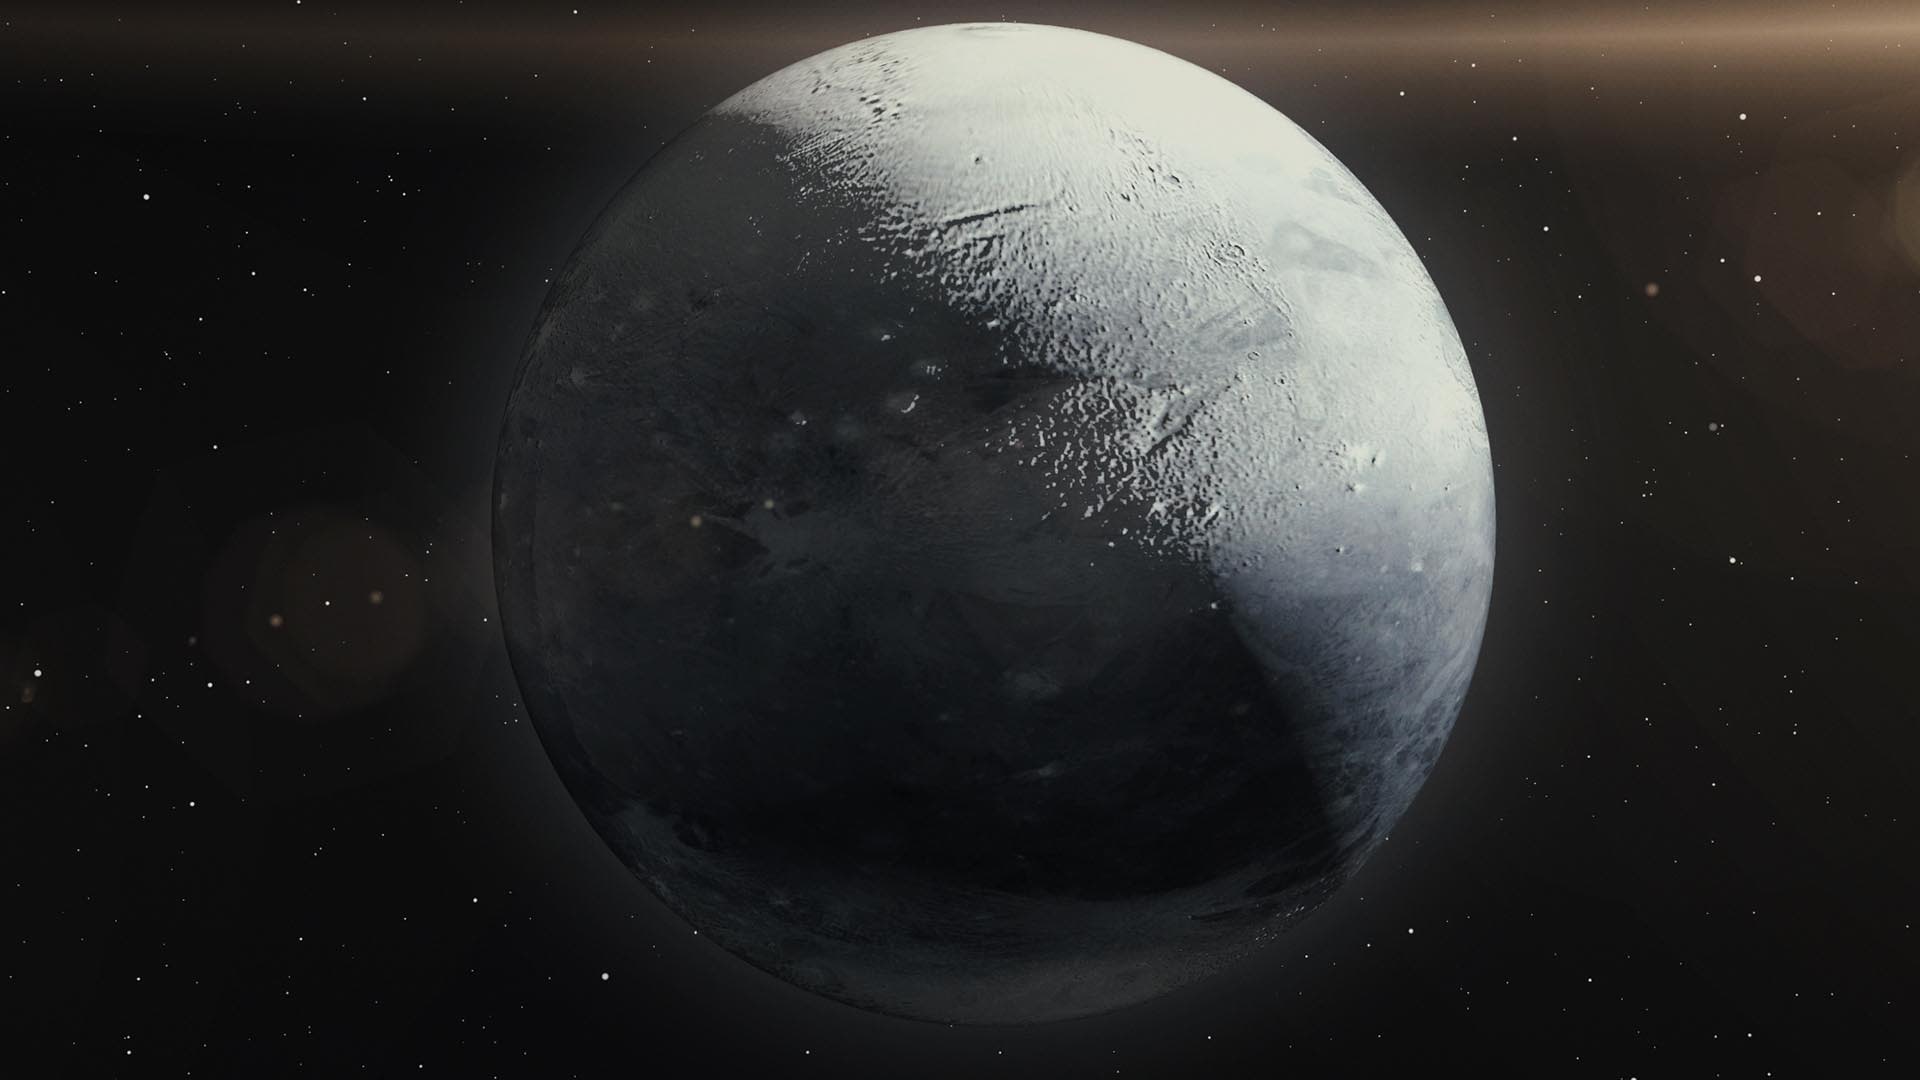 Trpasličí planeta Pluto